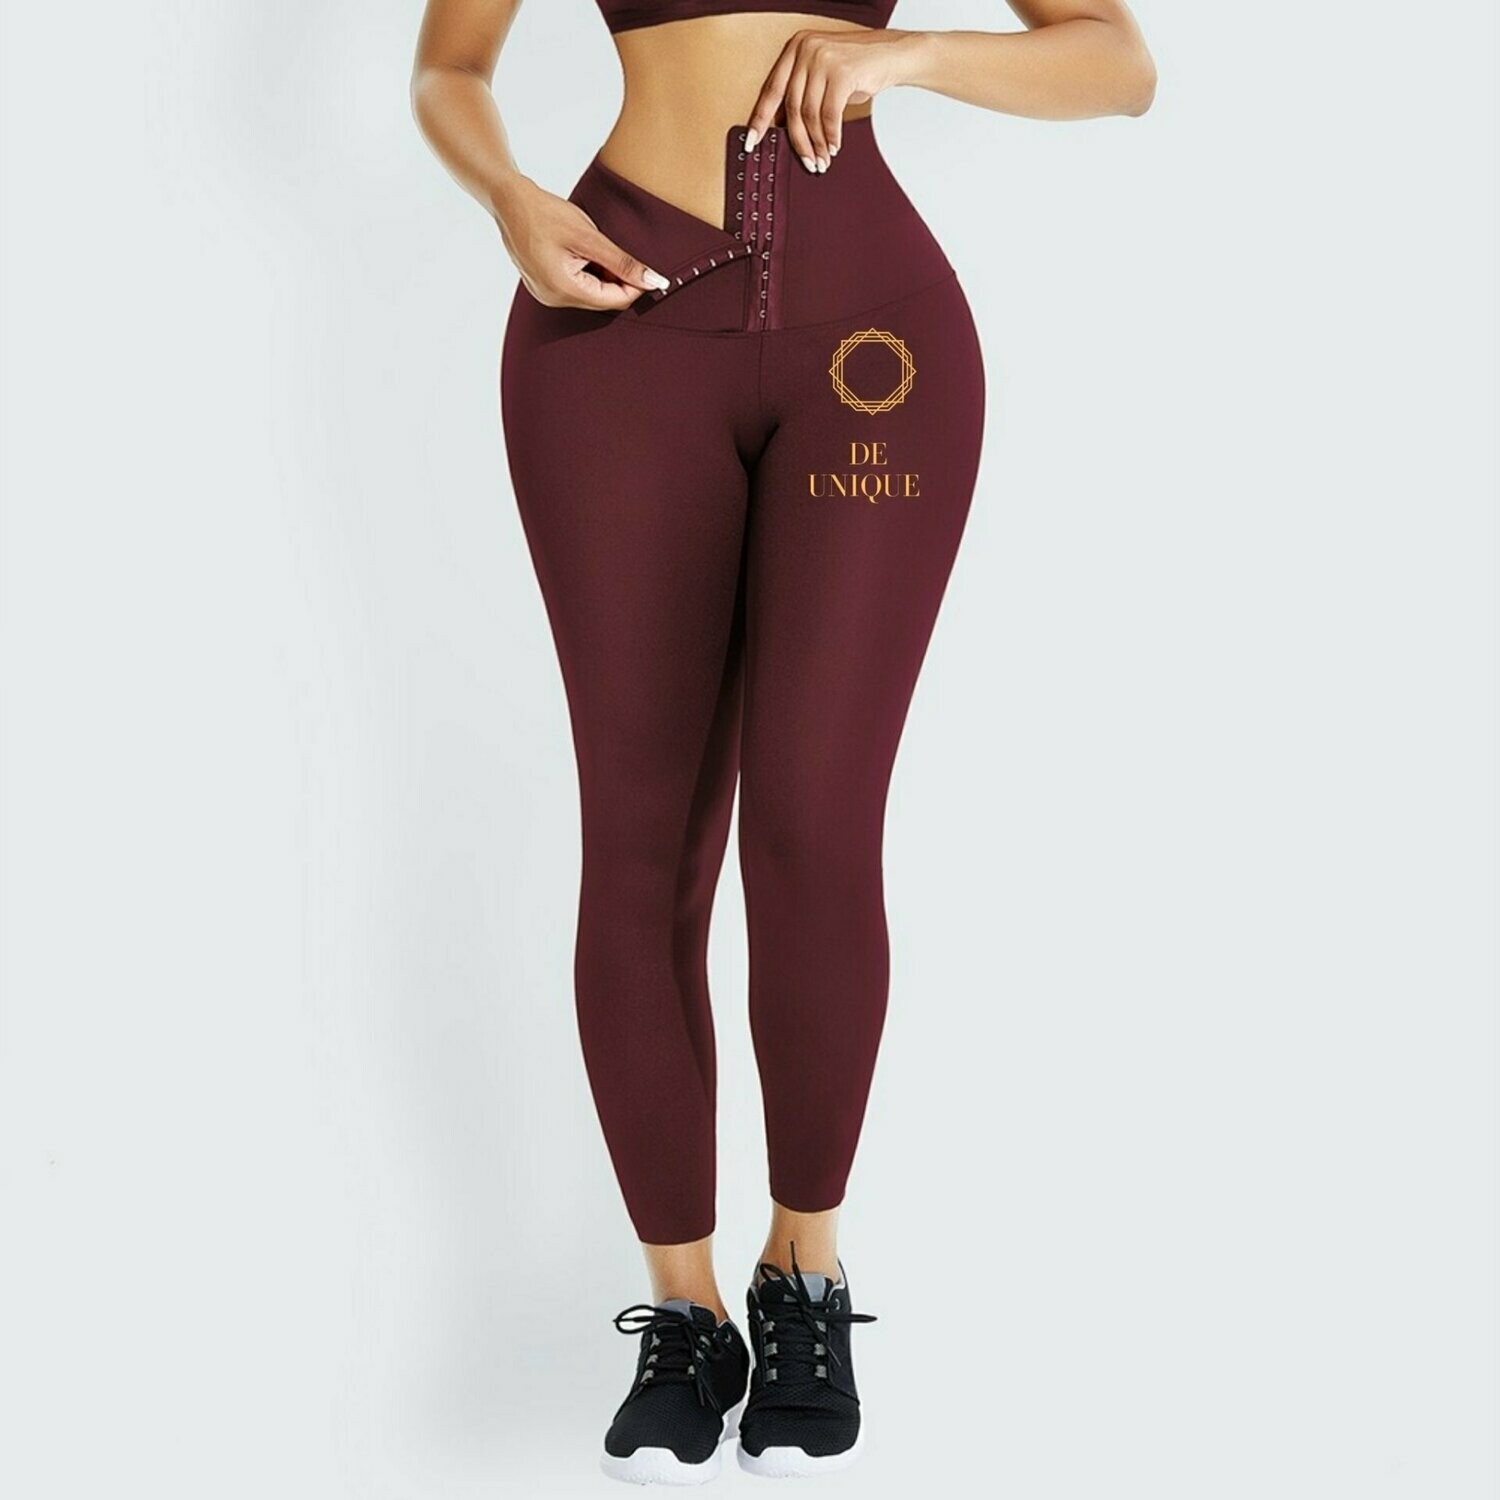 Burgundy/Red Large High waist trainer leggings